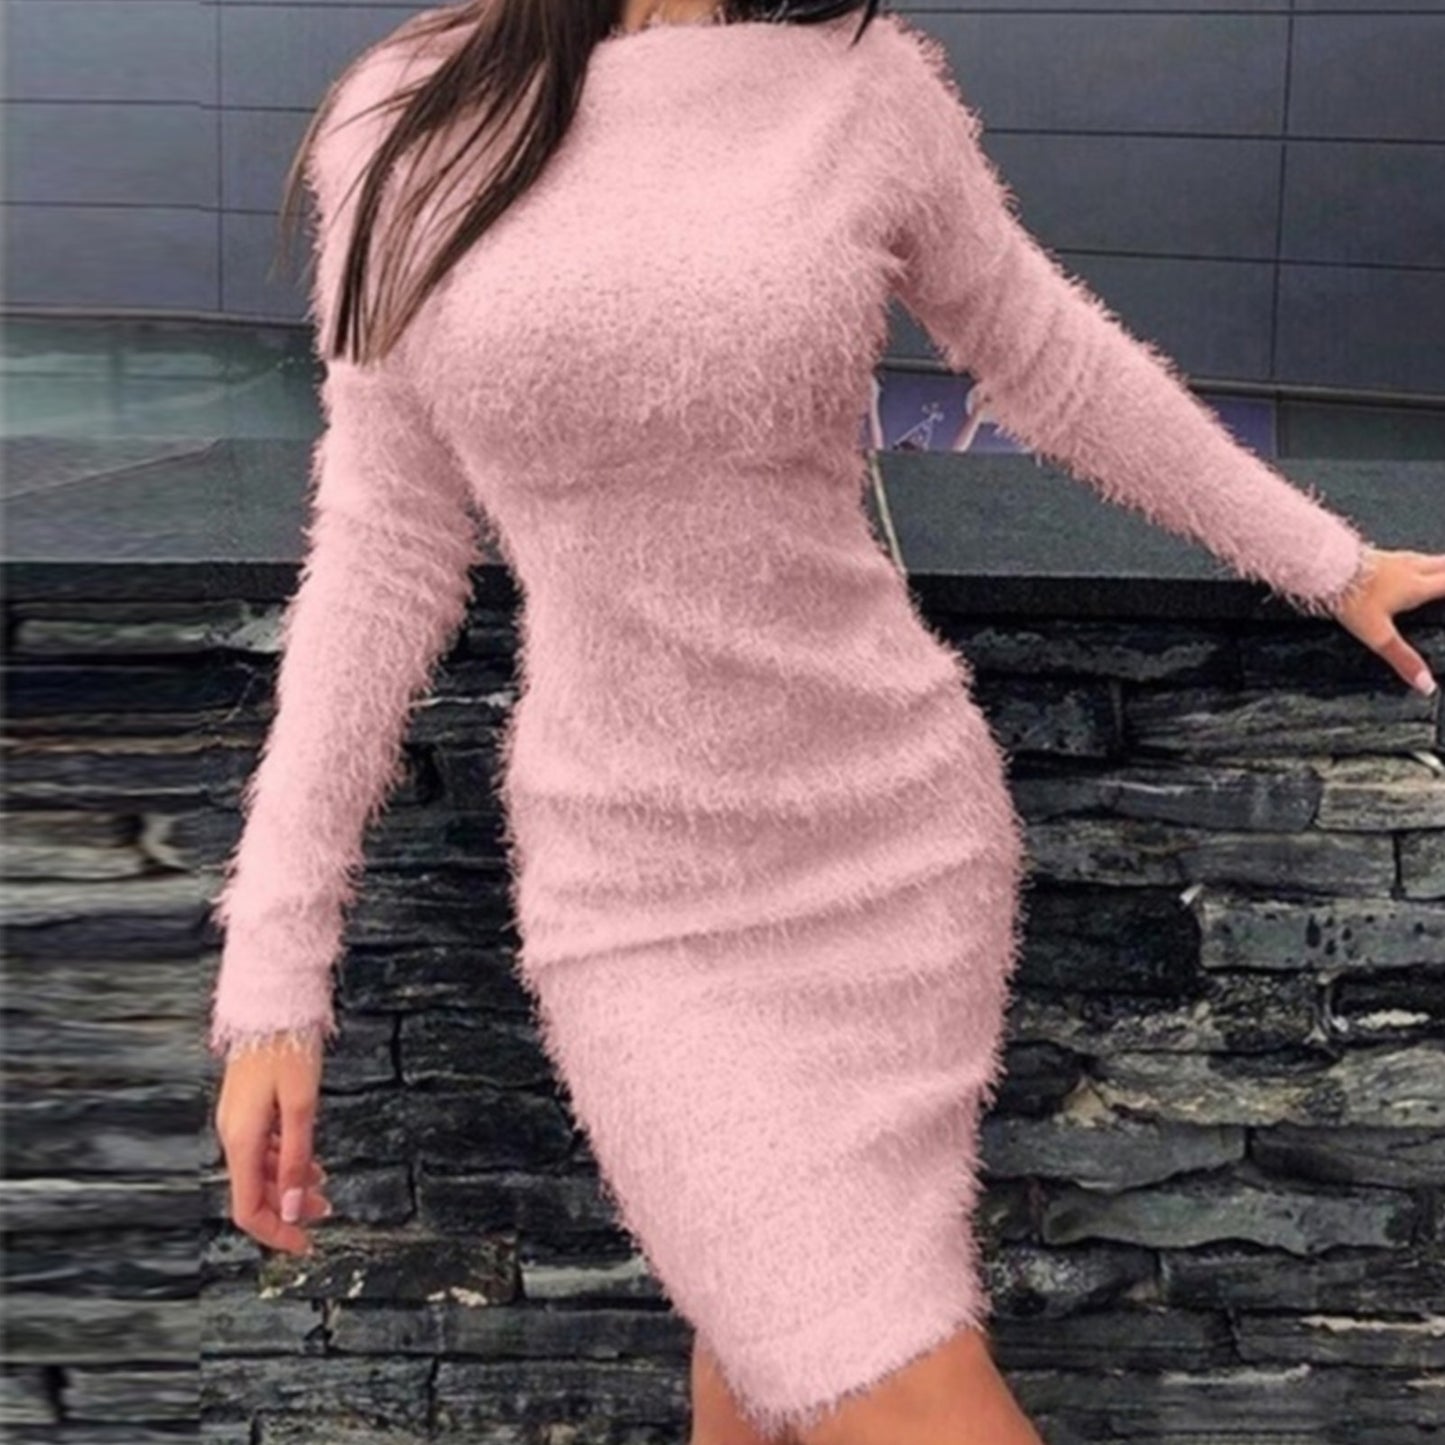 Hot Plus Size Women Dress Autumn Winter Solid Color Long Sleeve Sweater Fluffy Kee-length Bodycon Dress платье